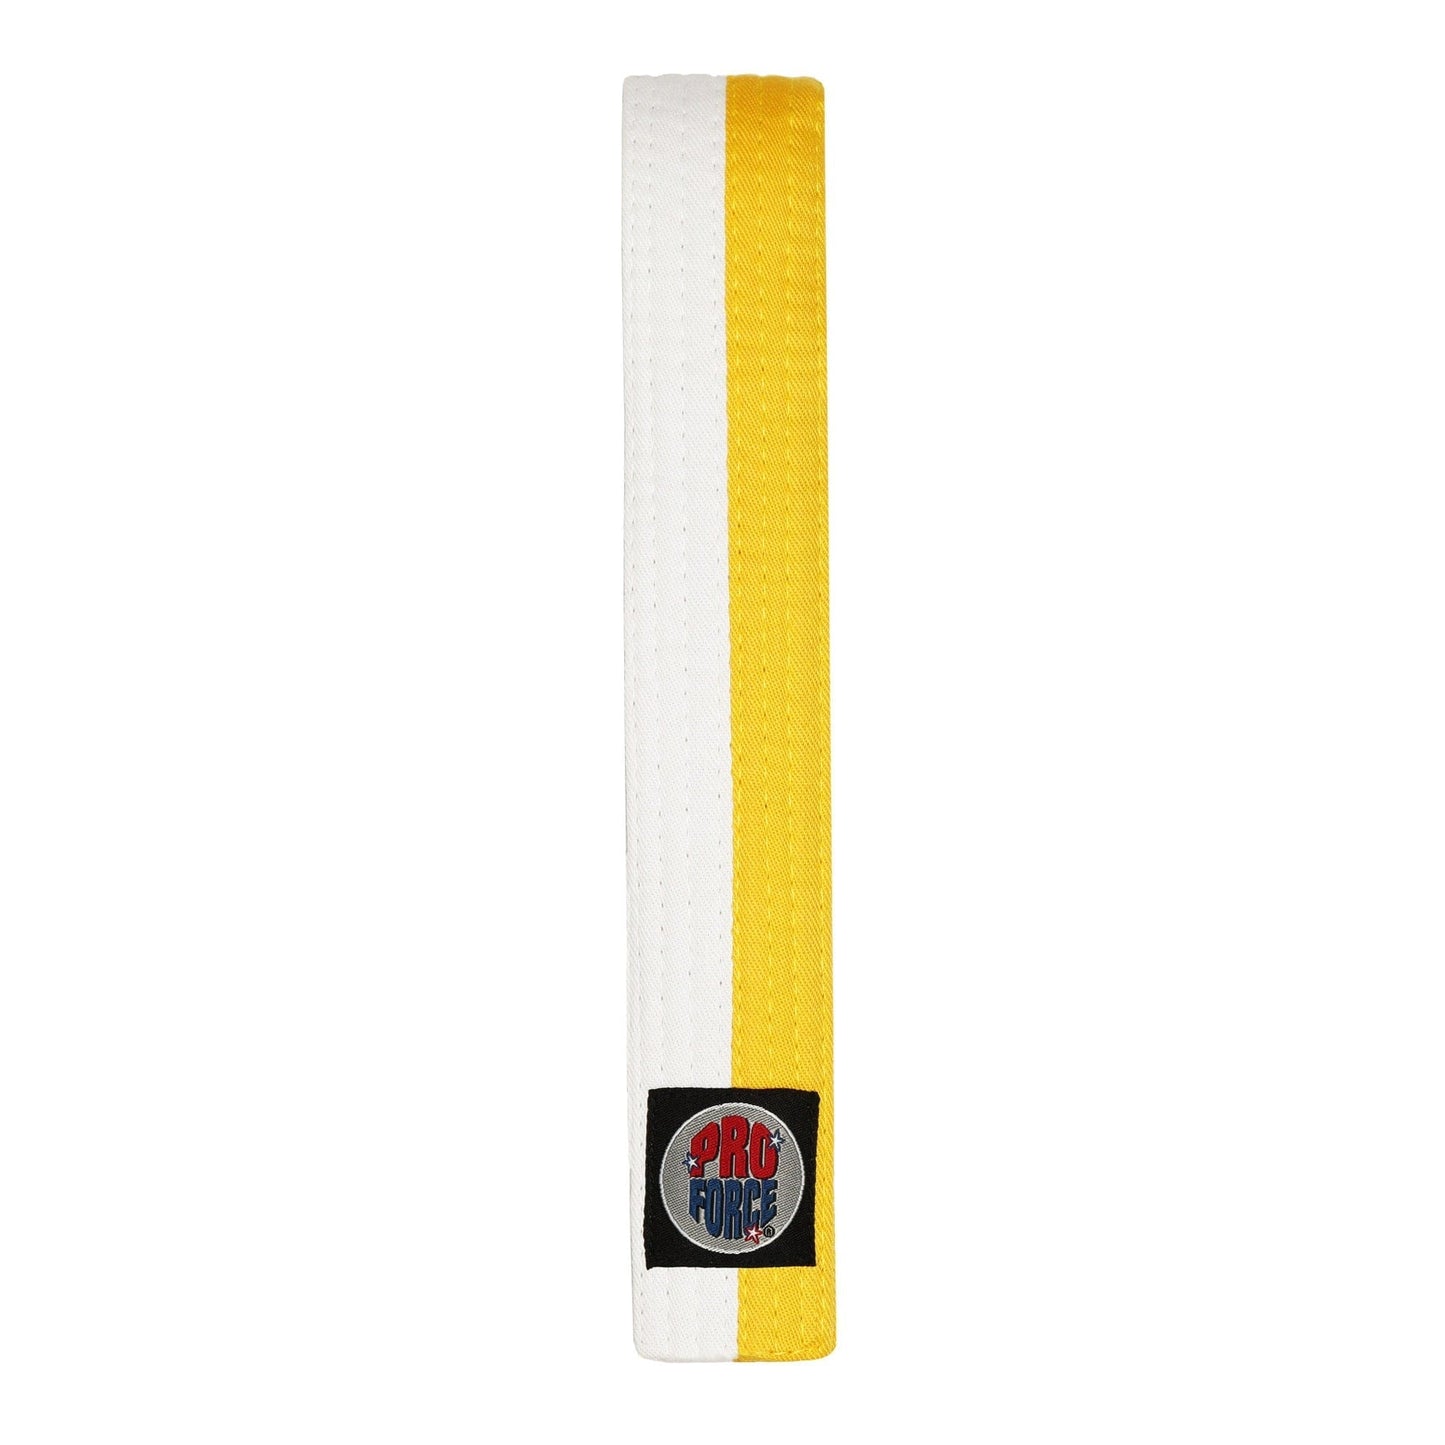 ProForce karate belt Yellow / 0 child Small ProForce 1.5 inch wide Double Wrap Two-Tone Karate Belt